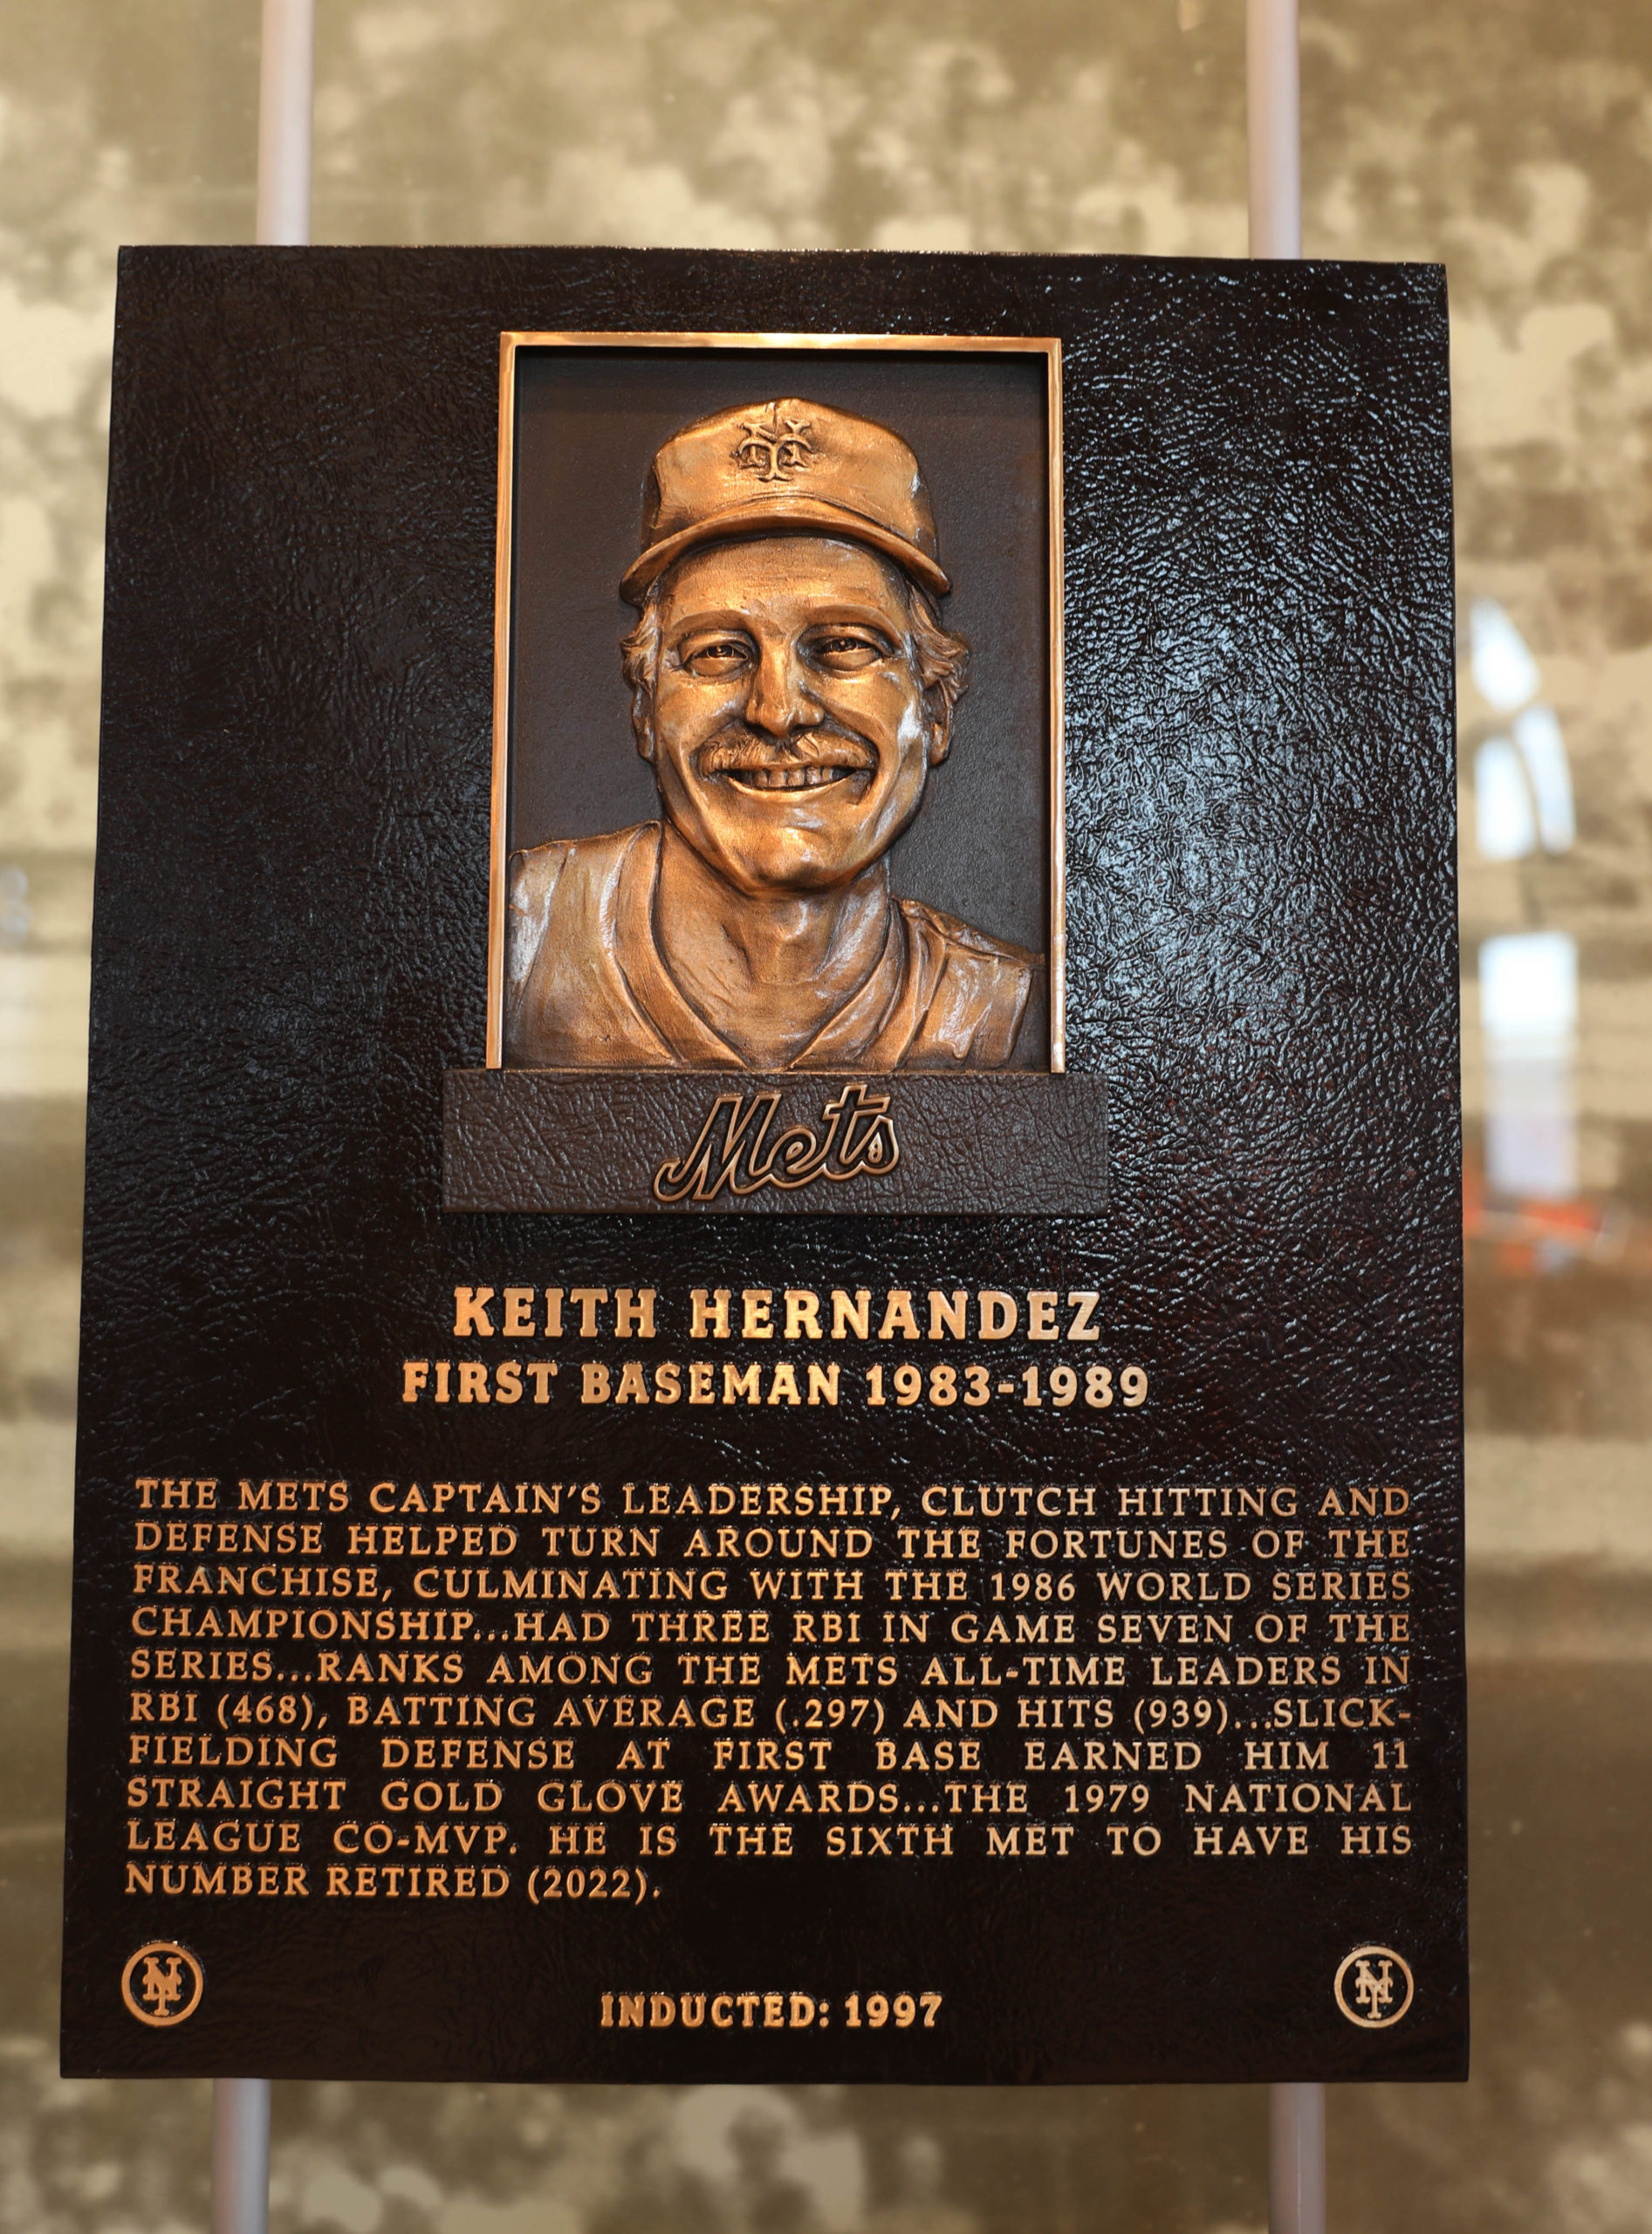 The Hall of Fame case for Cardinals, Mets legend Keith Hernandez